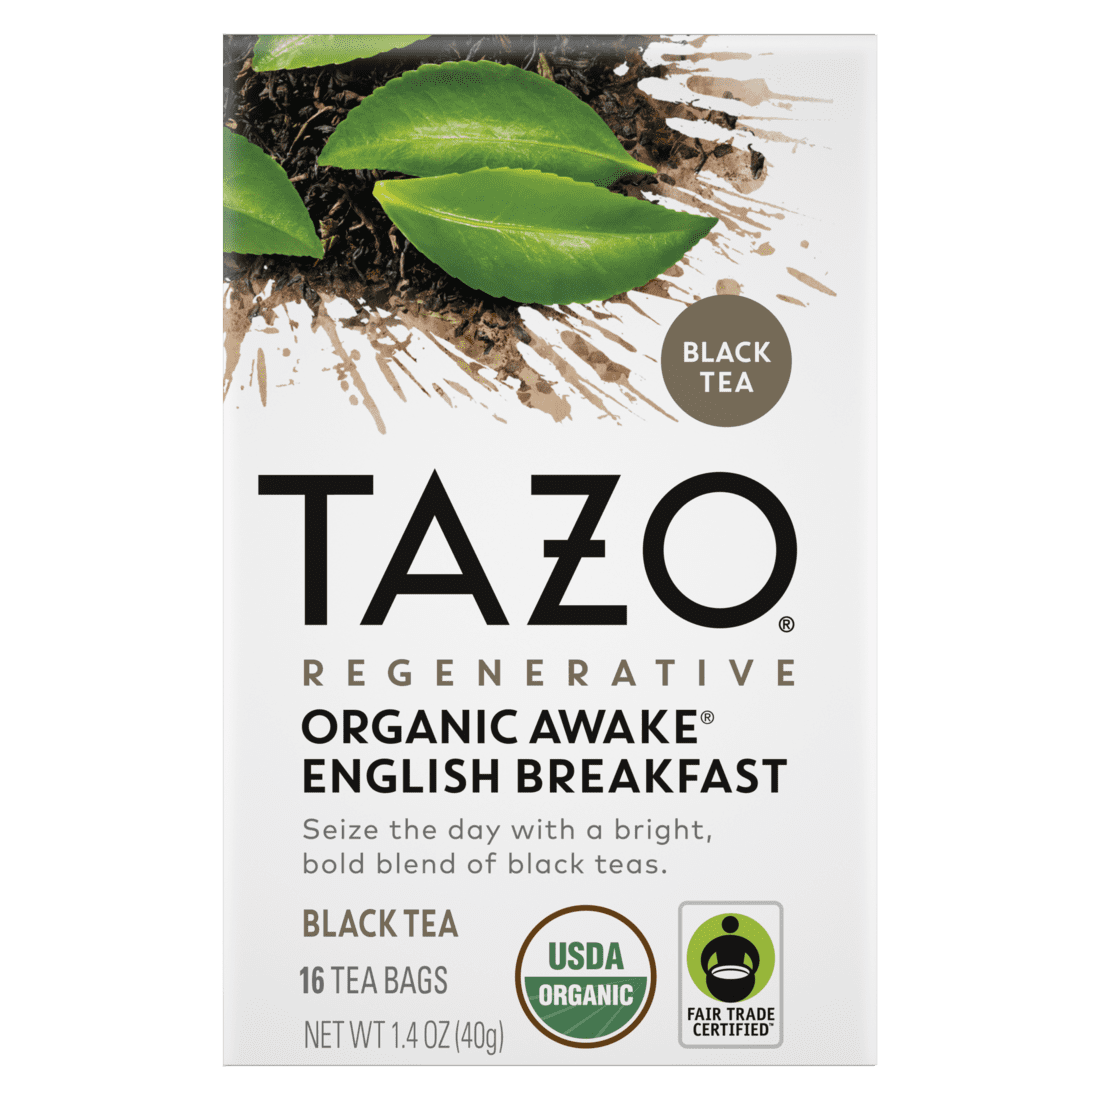 TAZO Tea Bag Regenerative Organic Awake, Black Tea, Caffeinated, 16 Count Box